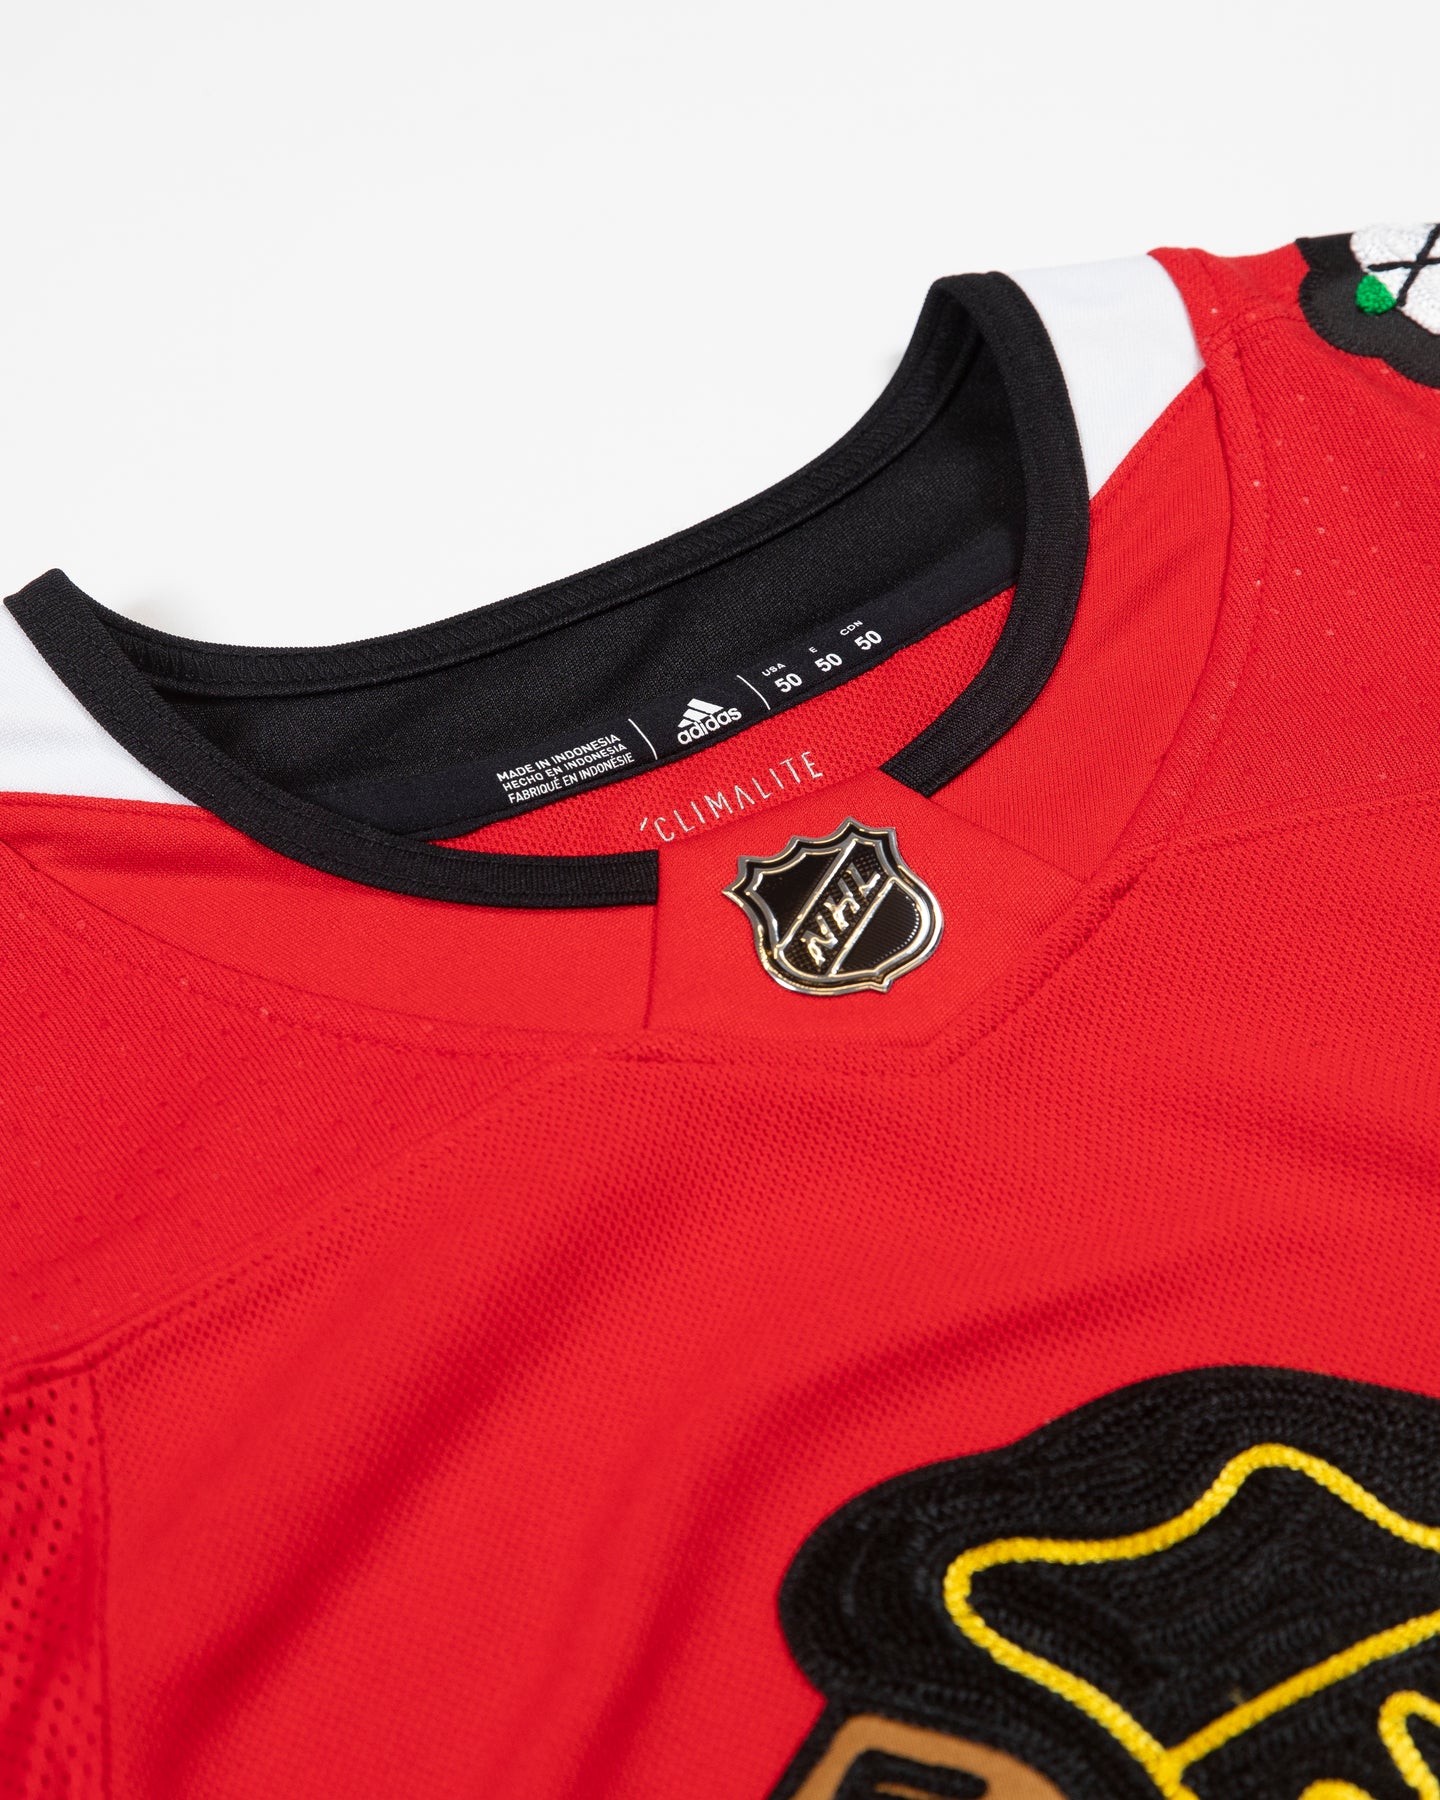 Adidas NHL Chicago Blackhawks Authentic Jersey - Adult